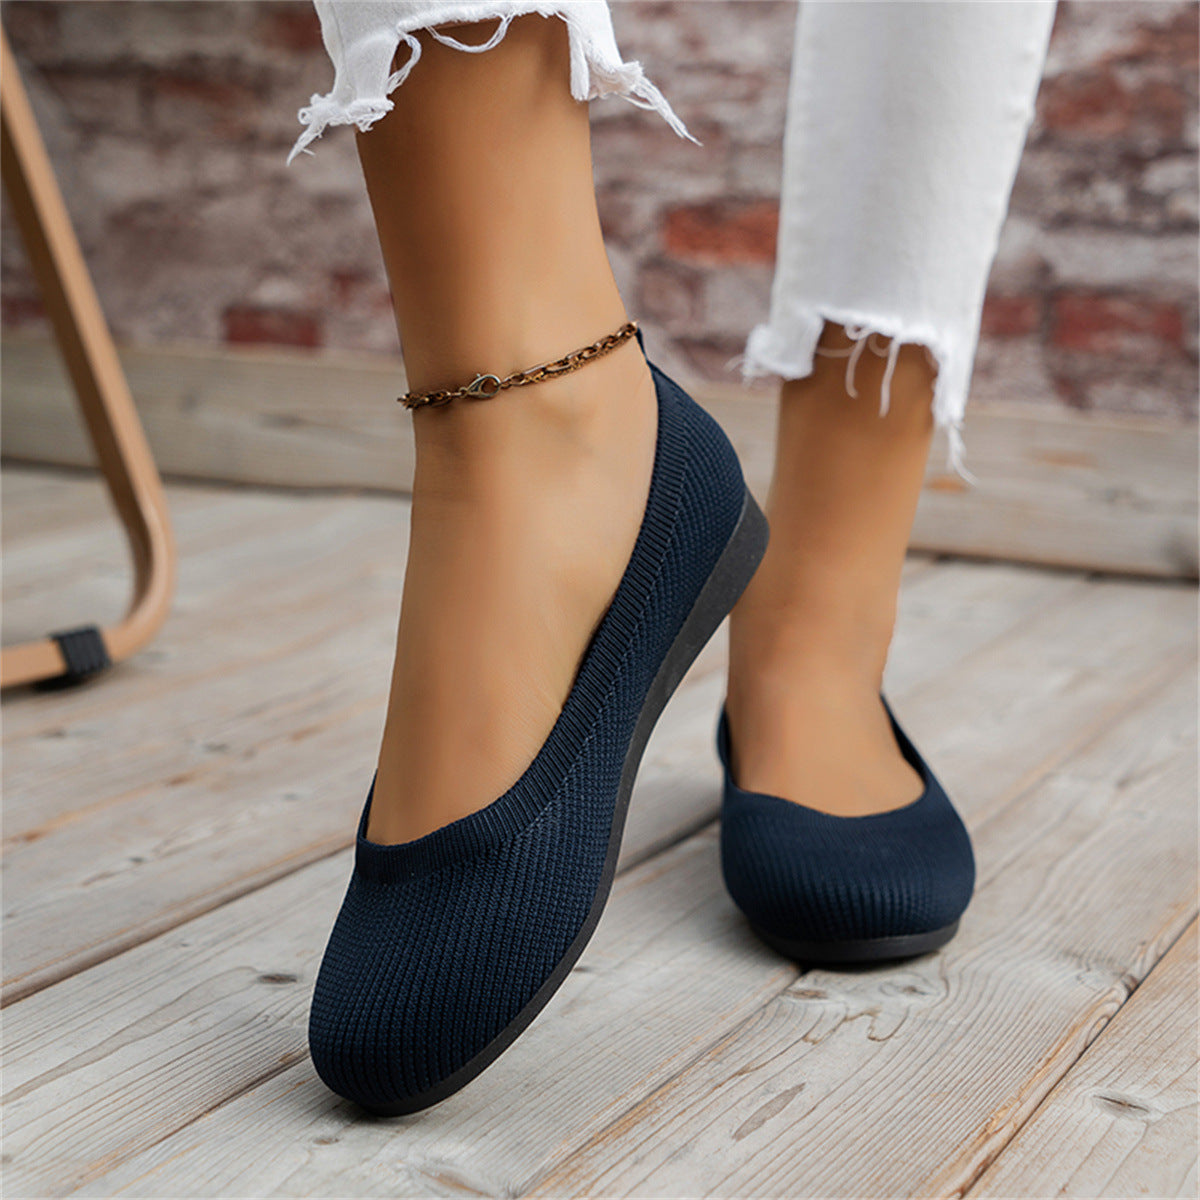 Rosin™ - Orthopaedic ballet shoes for women